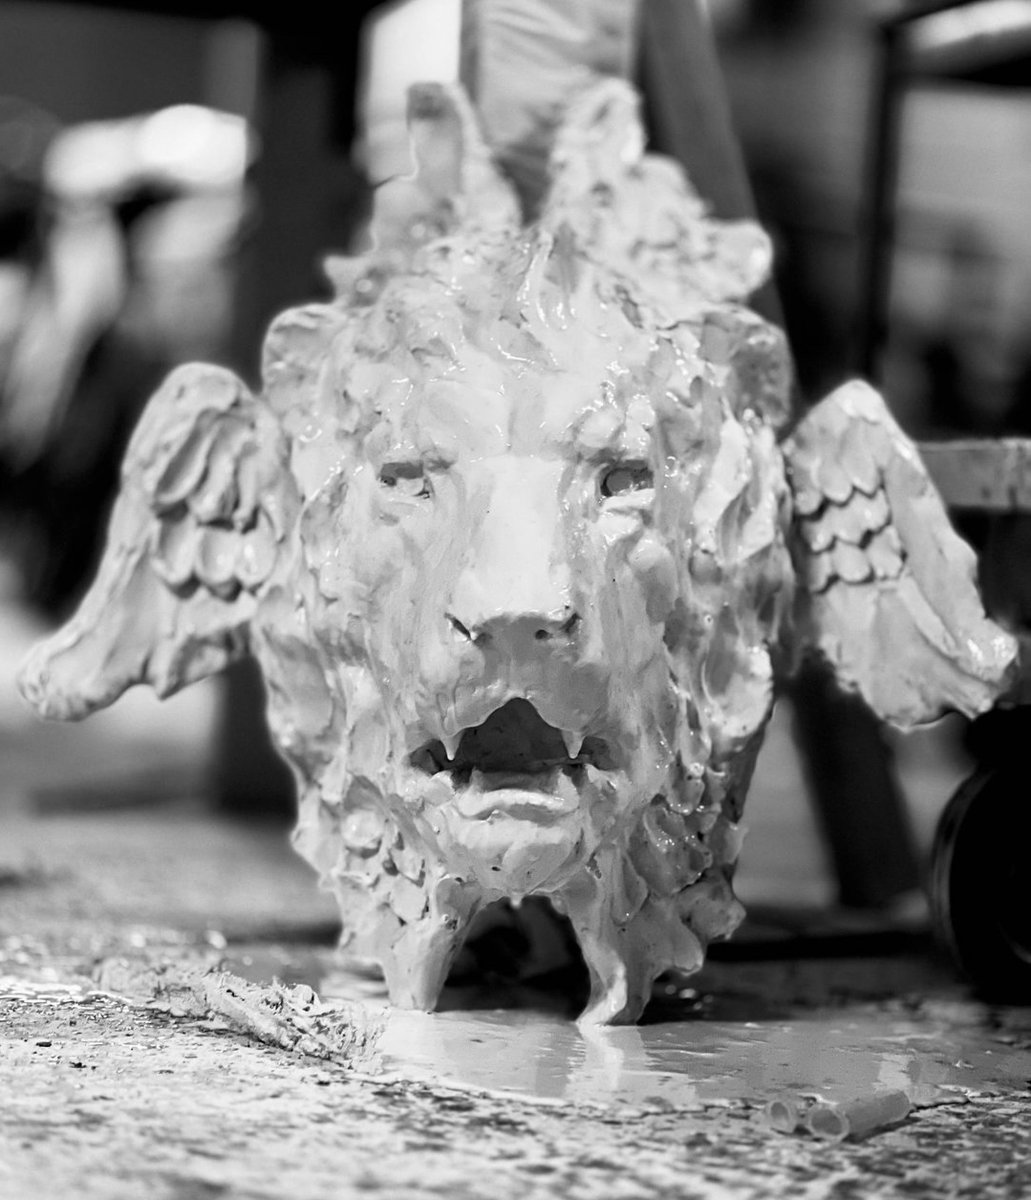 Sculptor and architect Giulio Cinti (IG: giulio_cinti) gives us a glimpse into his creative process with PAX TIBI! 

Discover the rest of his work here >> giuliocinti.net

#beautifulbizarre #giuliocinti #sculpture #italianart #italiansculpture